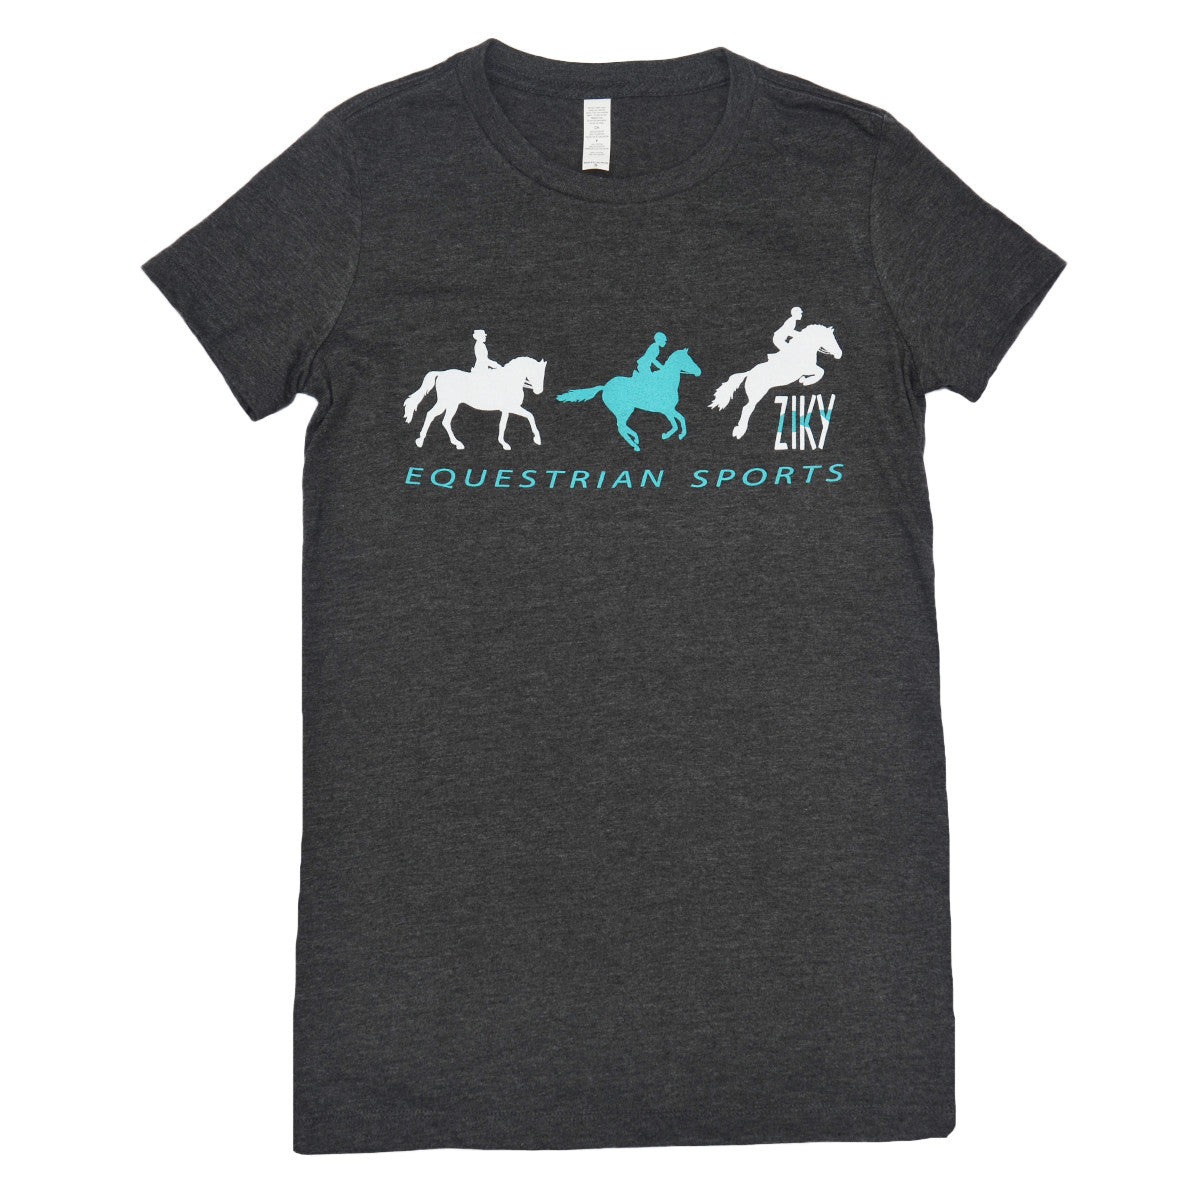 Equestrian Sports Shirt Smoky Black